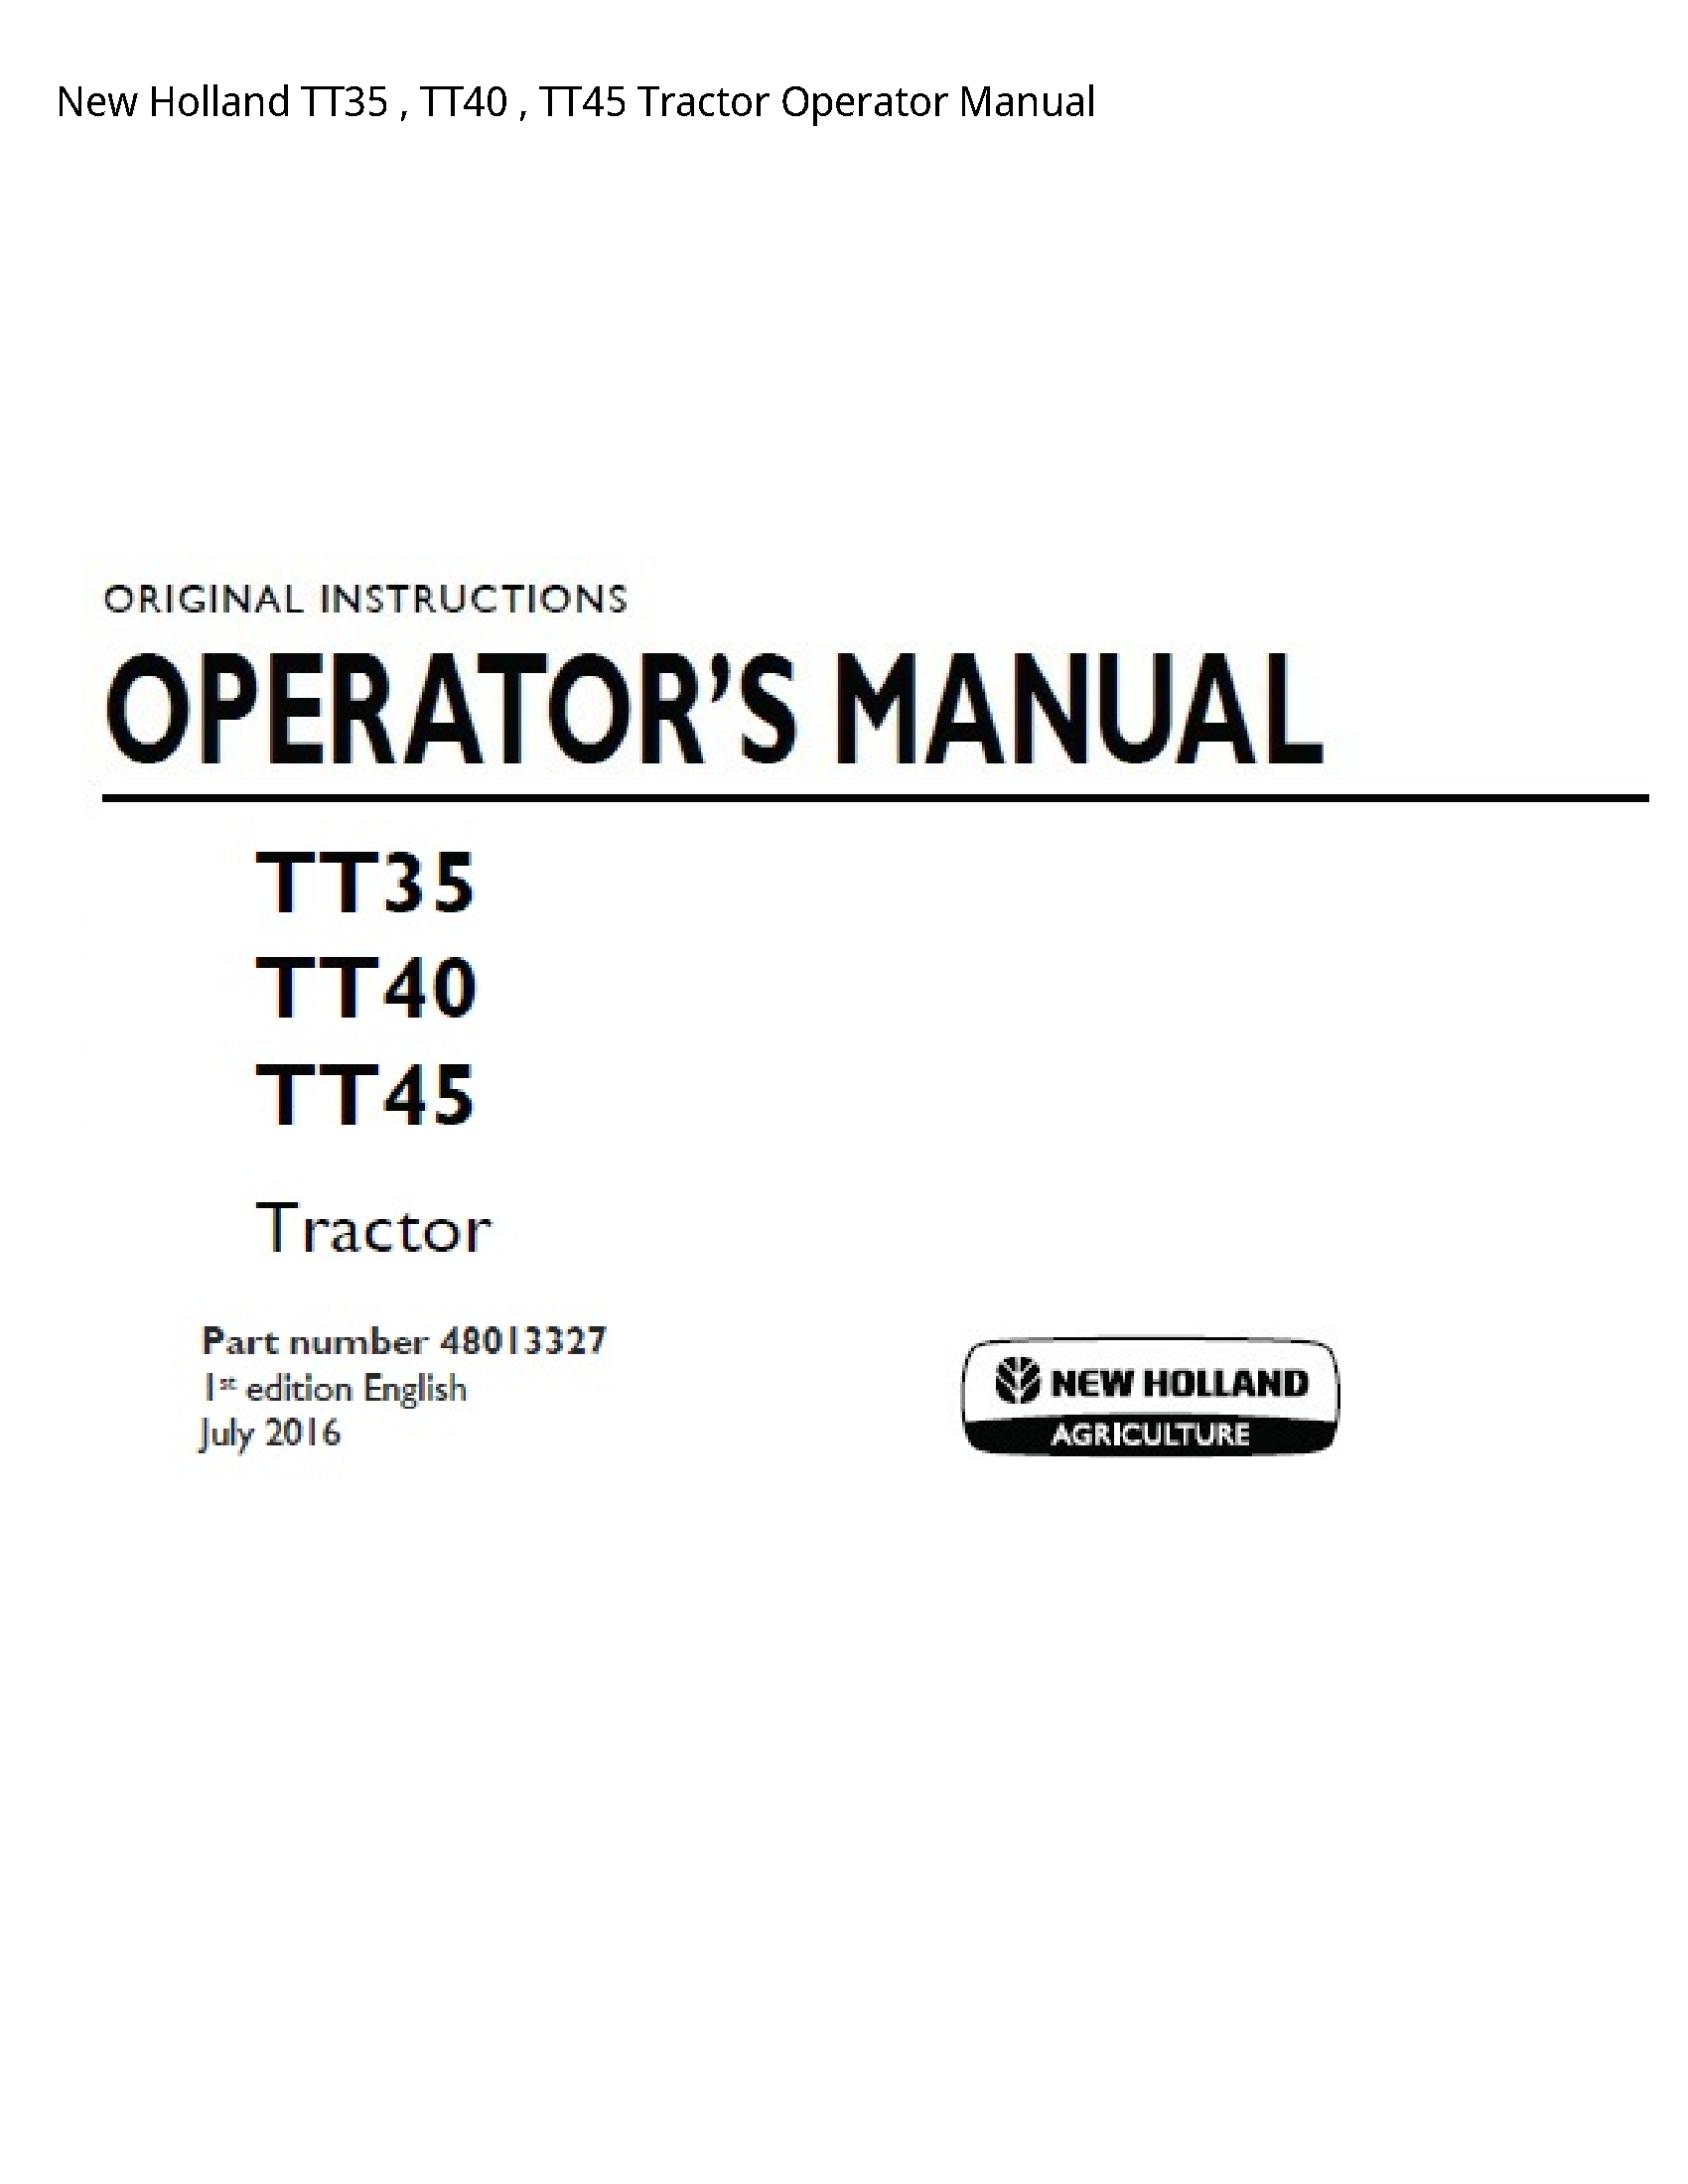 New Holland TT35 Tractor Operator manual